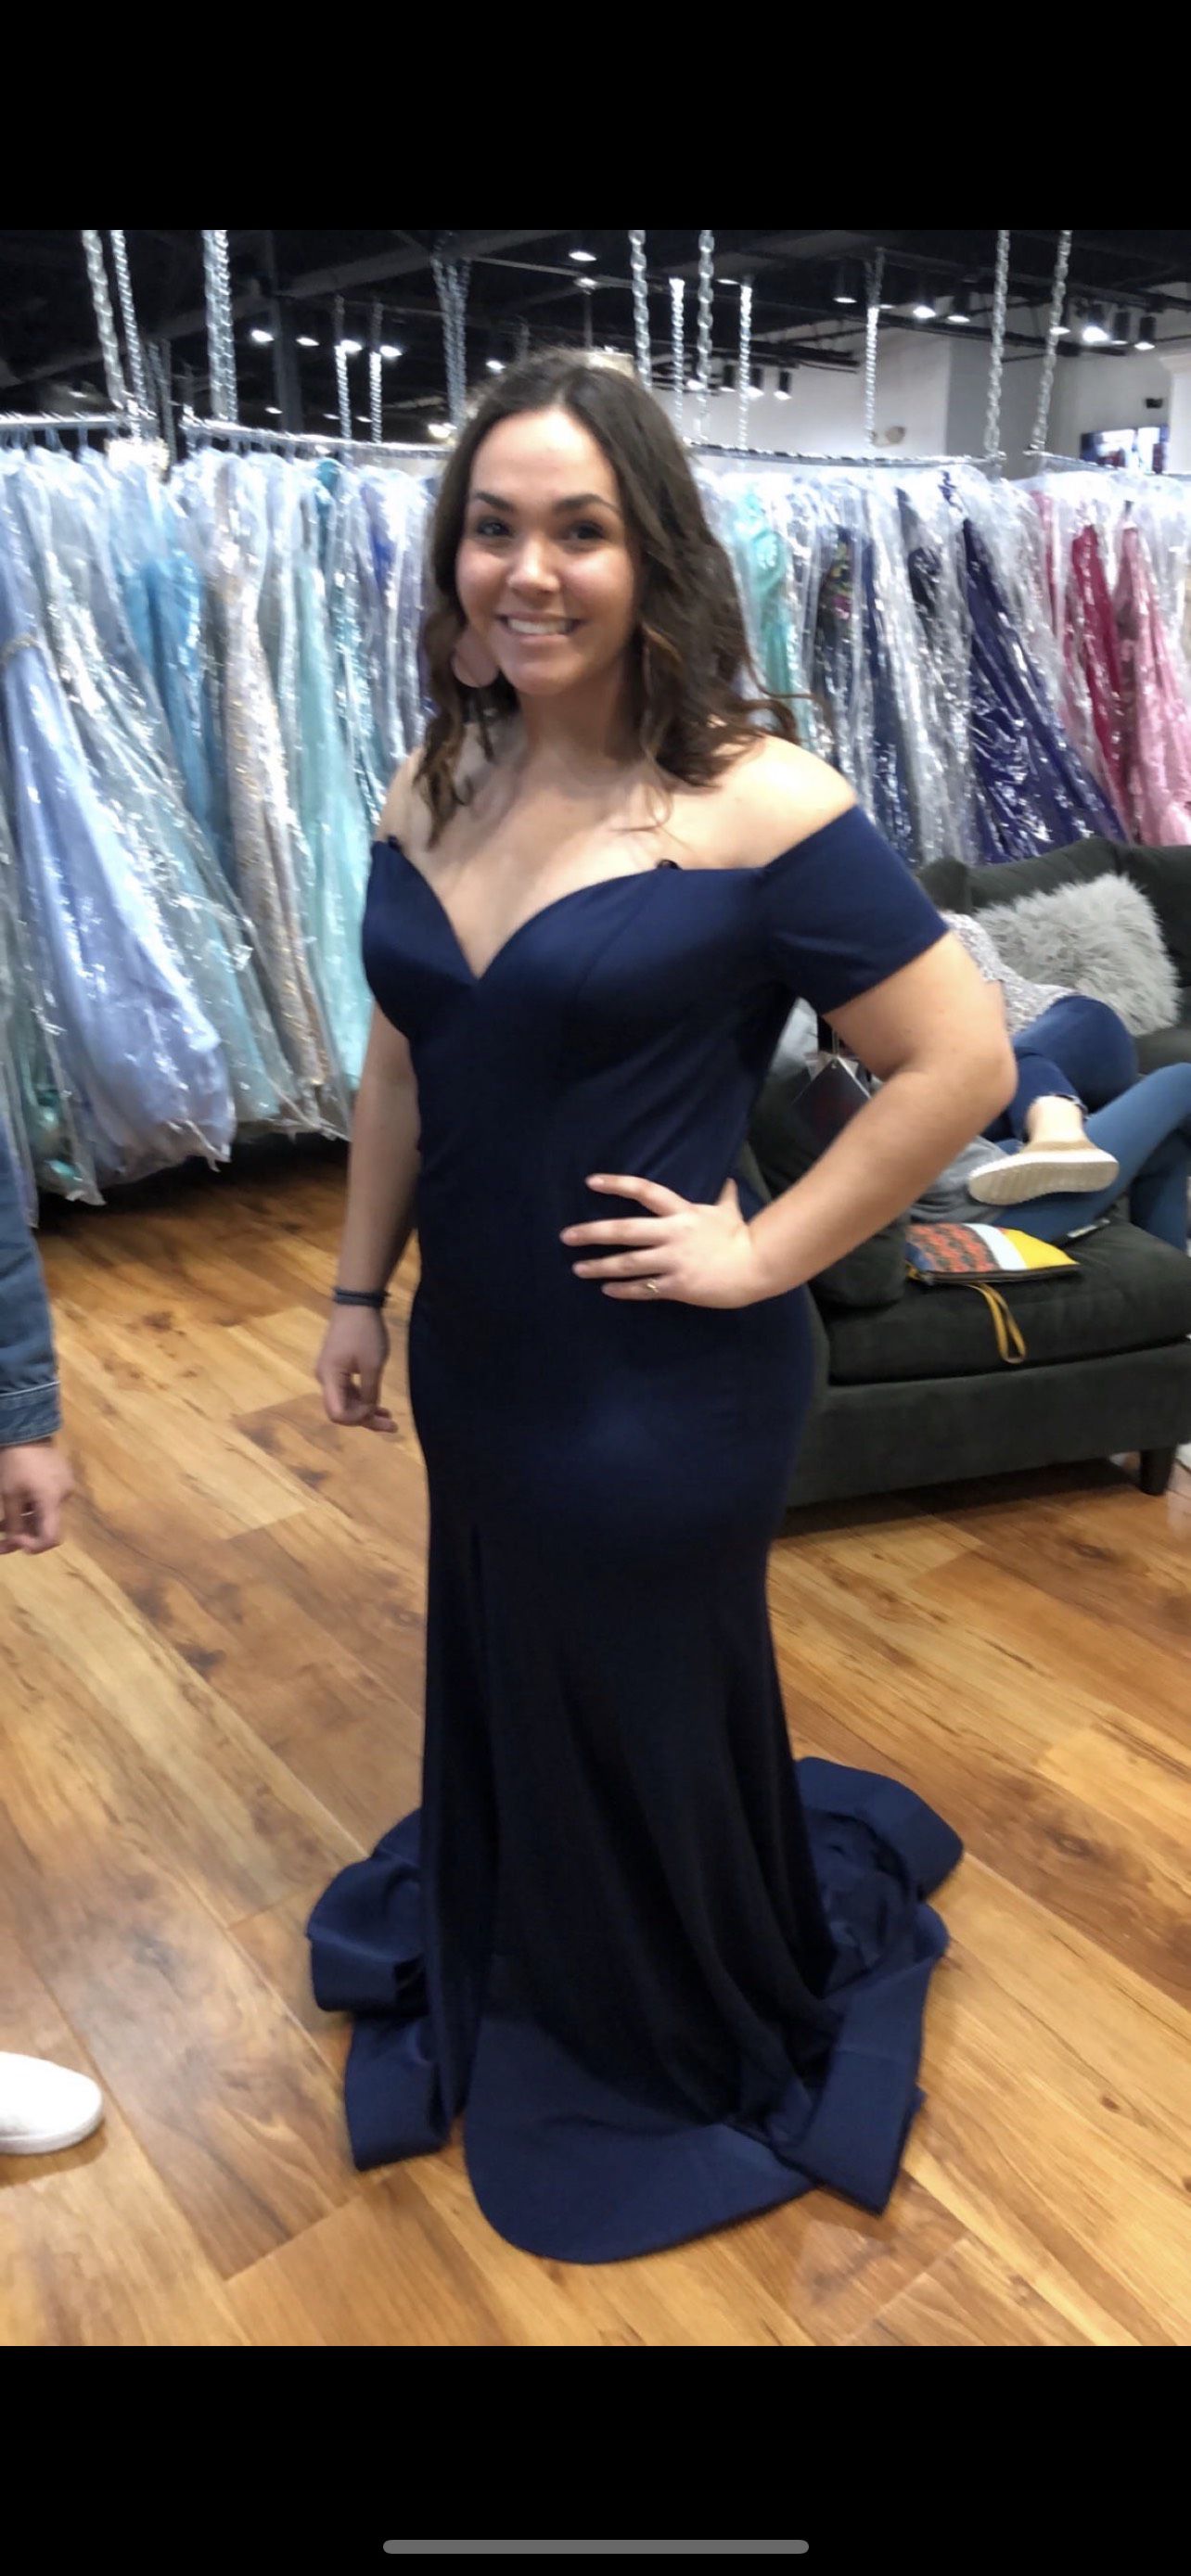 Glory Size 14 Prom Off The Shoulder Navy Blue Side Slit Dress on Queenly